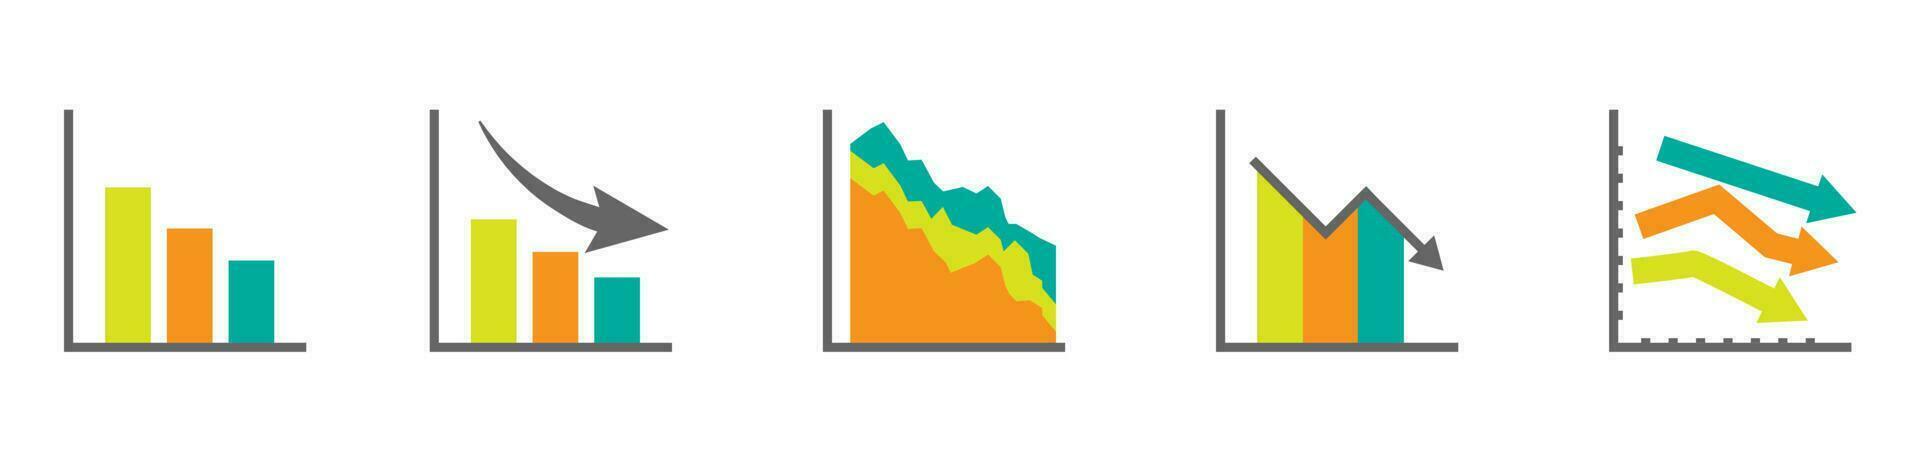 Decrease graph icon. Declining business report symbol. Flat chart graphic vector illustrator.